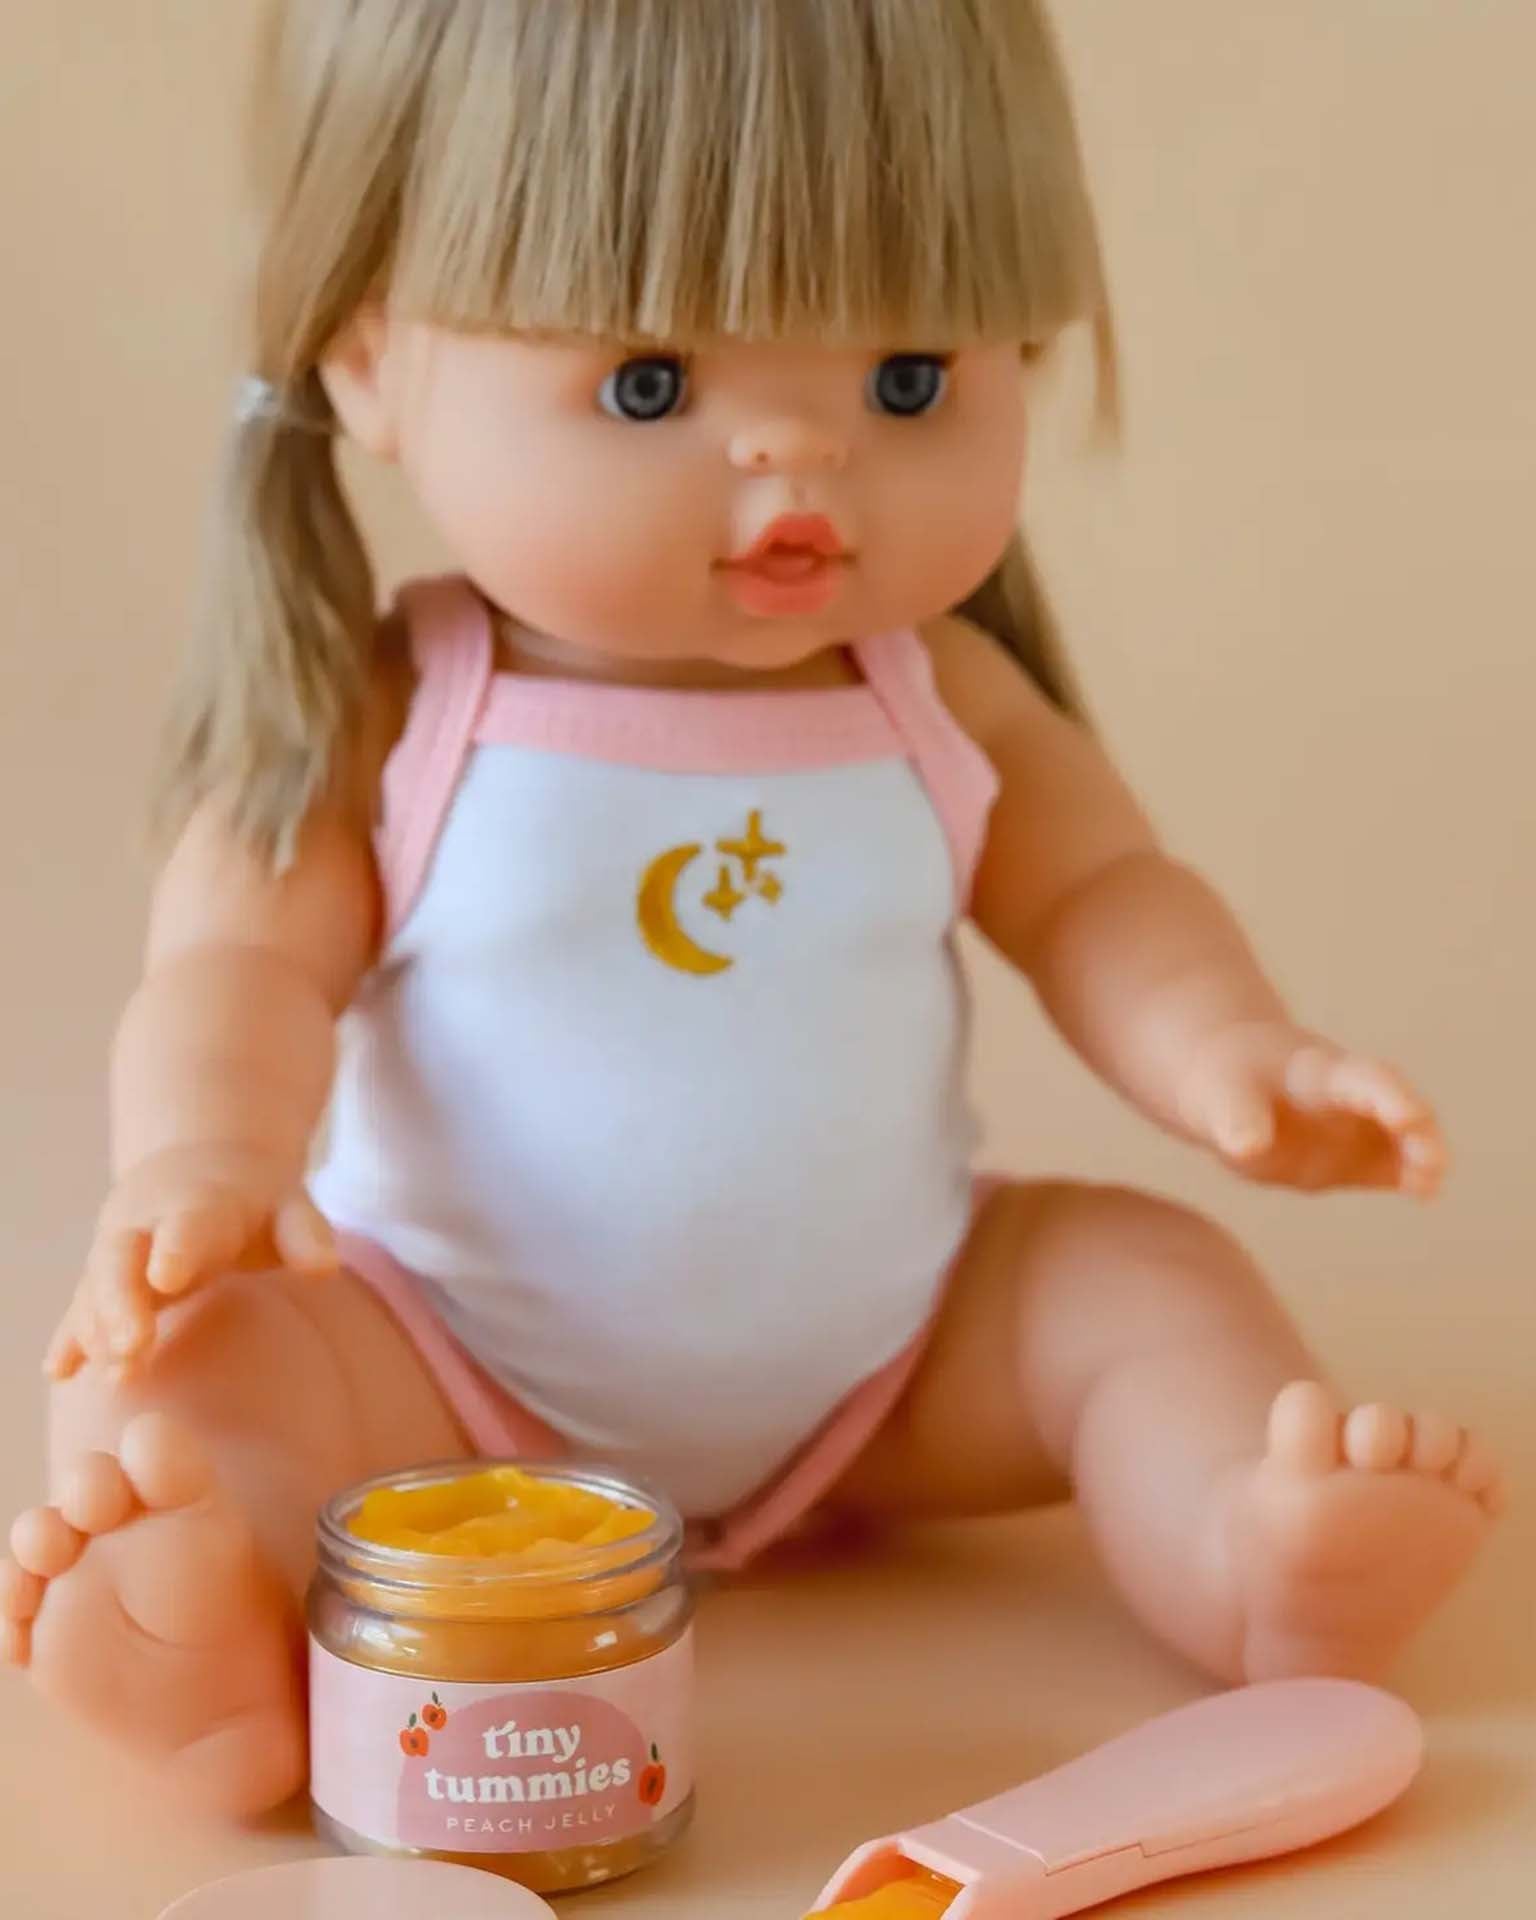 Little tiny harlow play tiny tummies jar + spoon peach jelly food